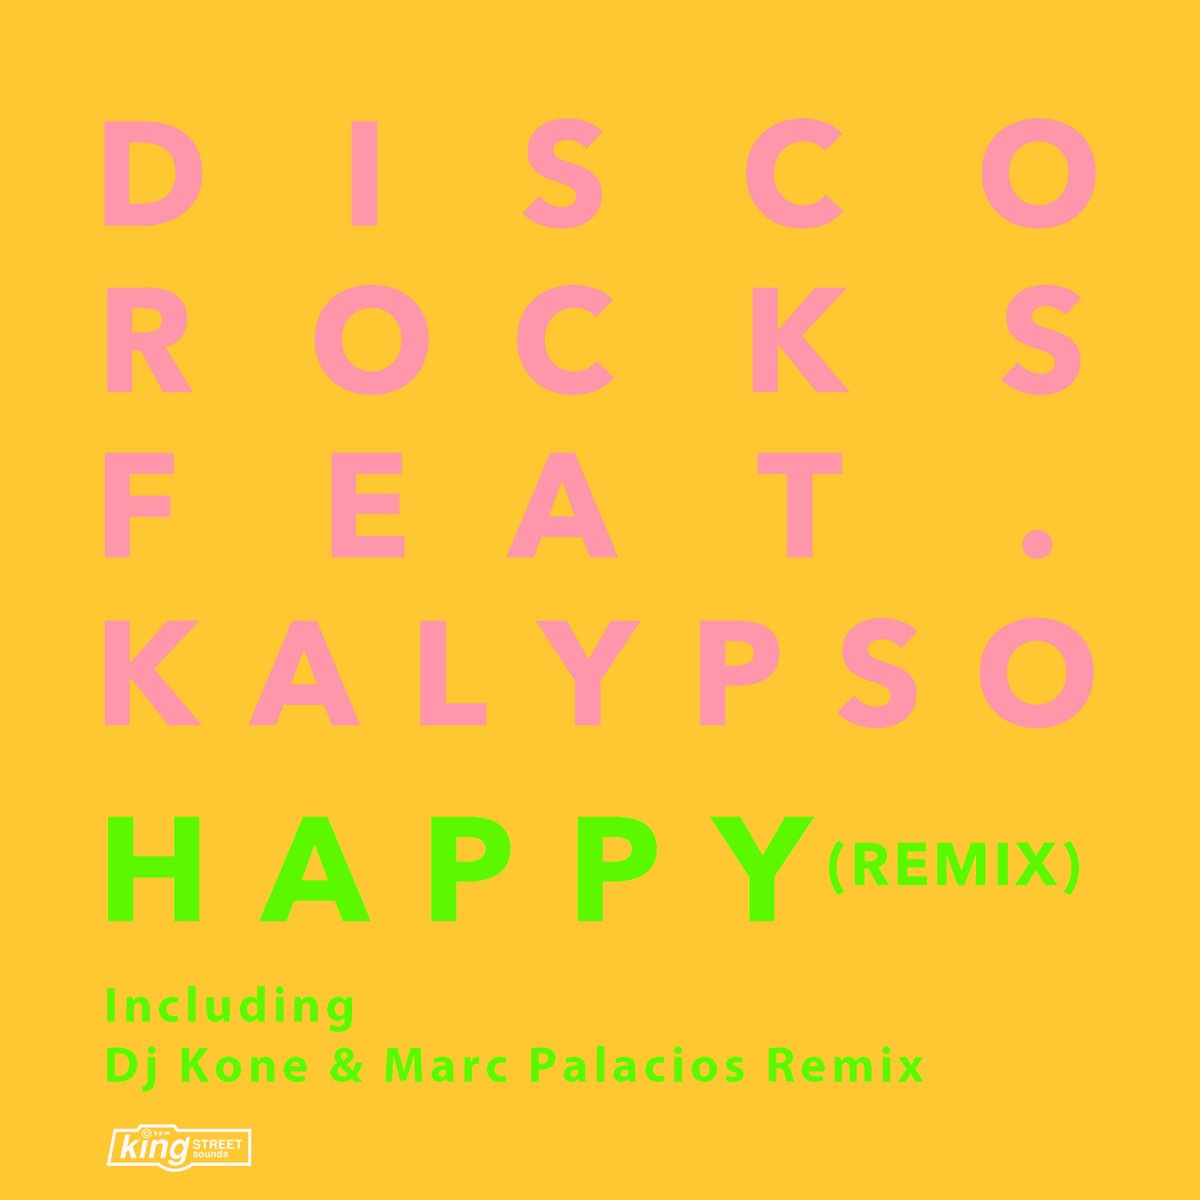 TJ stay Happy Remix. Kalypso-discorocks-Happy-Full-intentions-met-Life-Remix. Discorocks & Nakia. Be happy remix